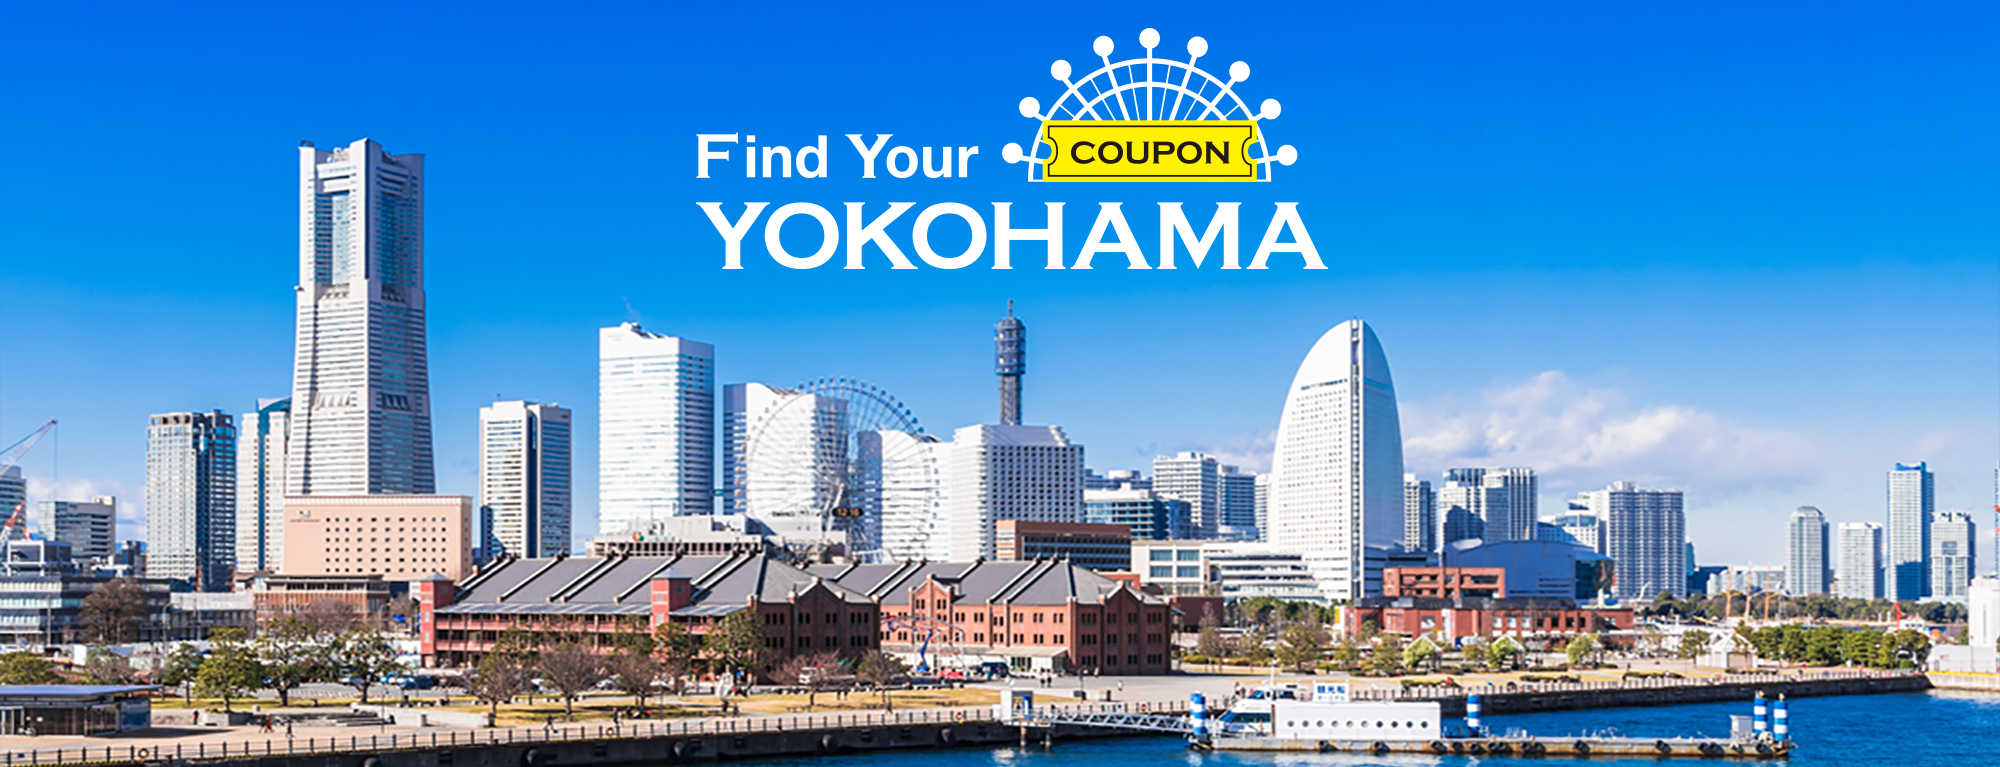 Find you YOKOHAMA COUPON 横浜市観光復興支援割引クーポン キャンペーン実施中！